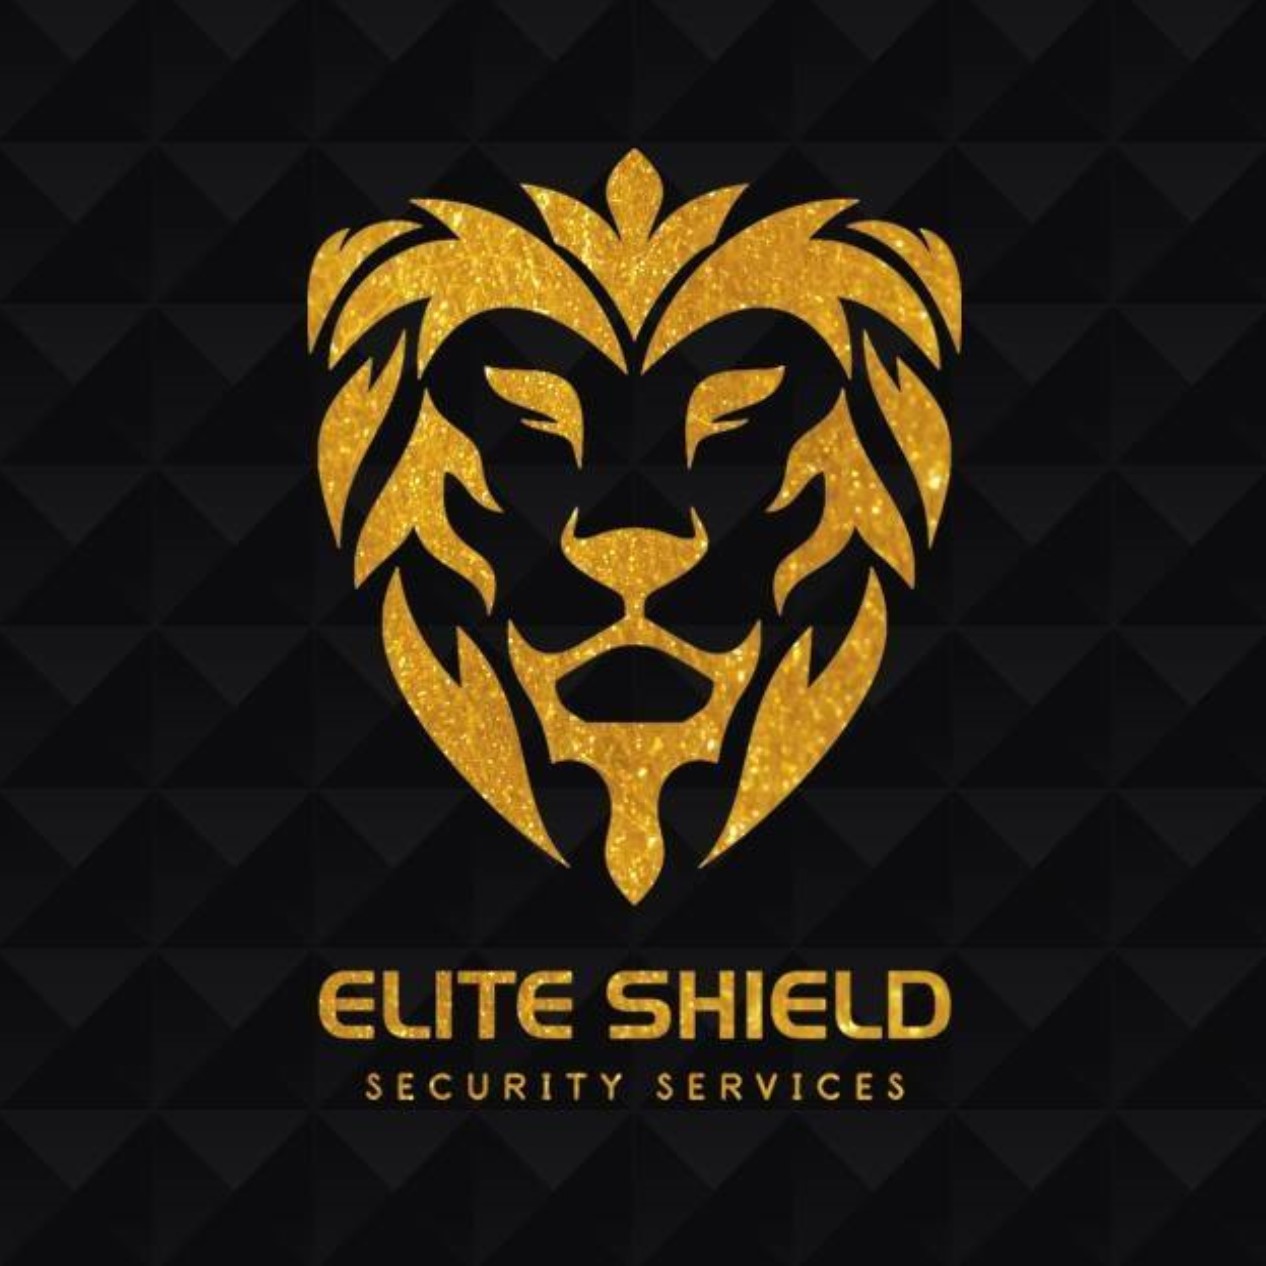 Elite shield security company